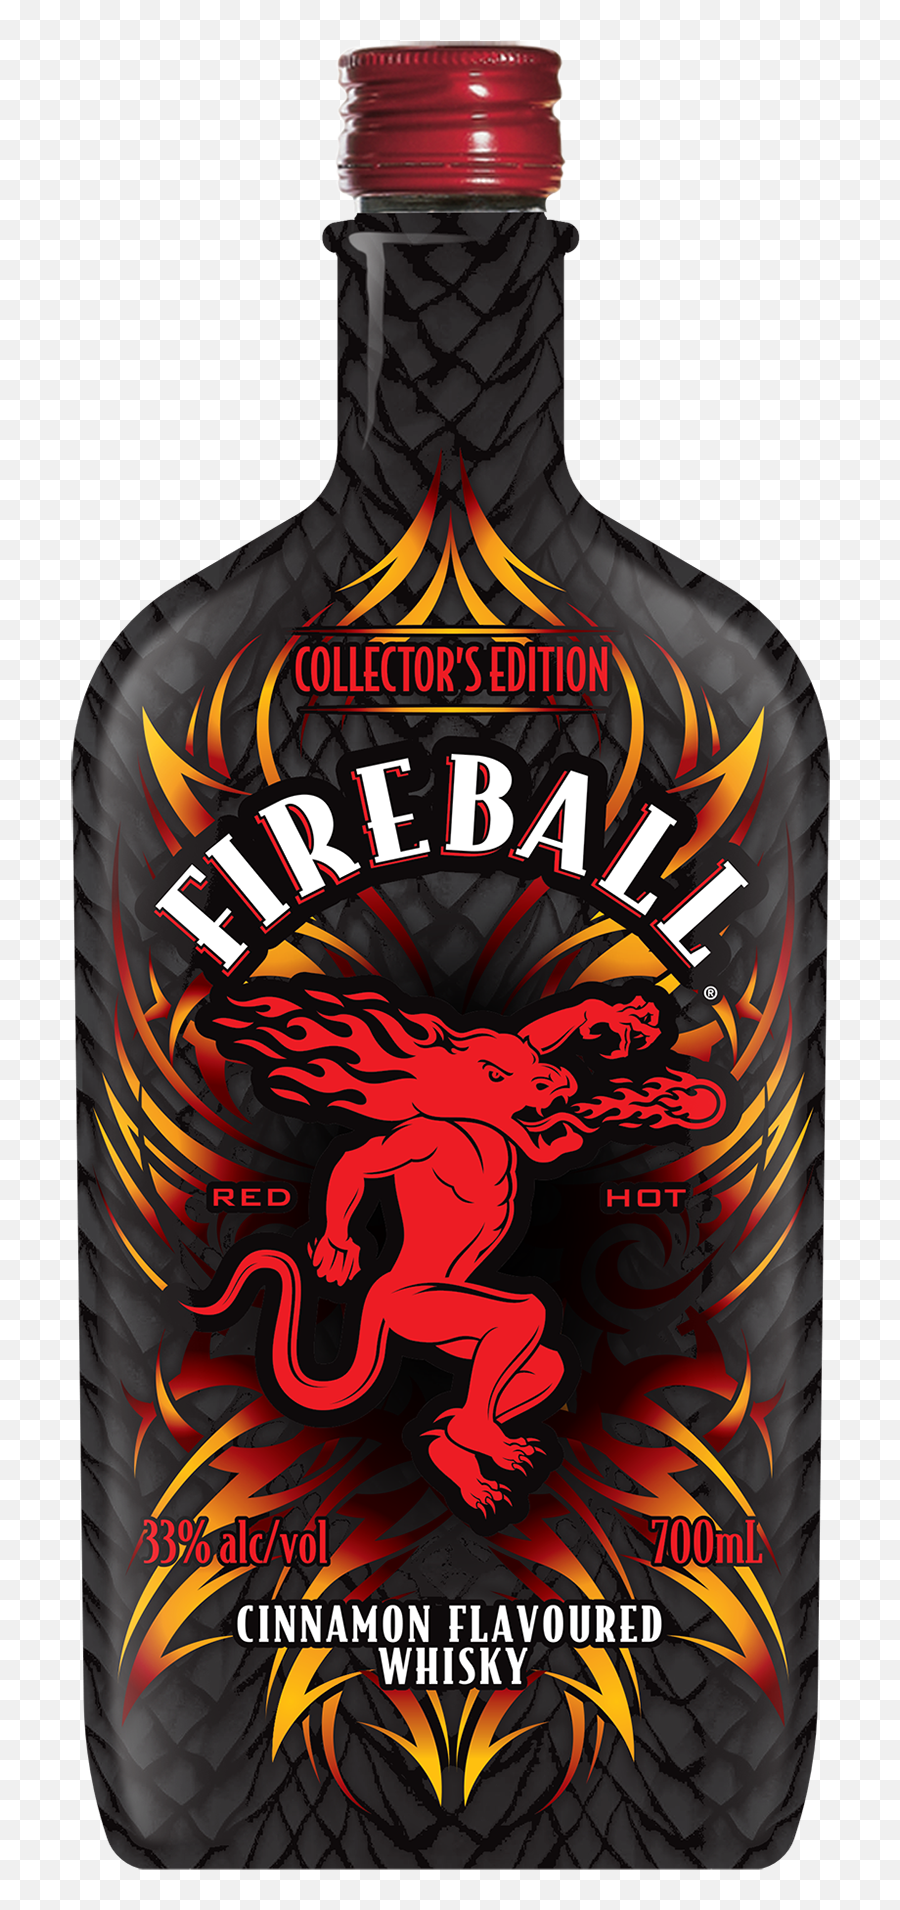 Fireball Collectors Edition 2020 - Fireball Edition Emoji,Fireball Whiskey Logo